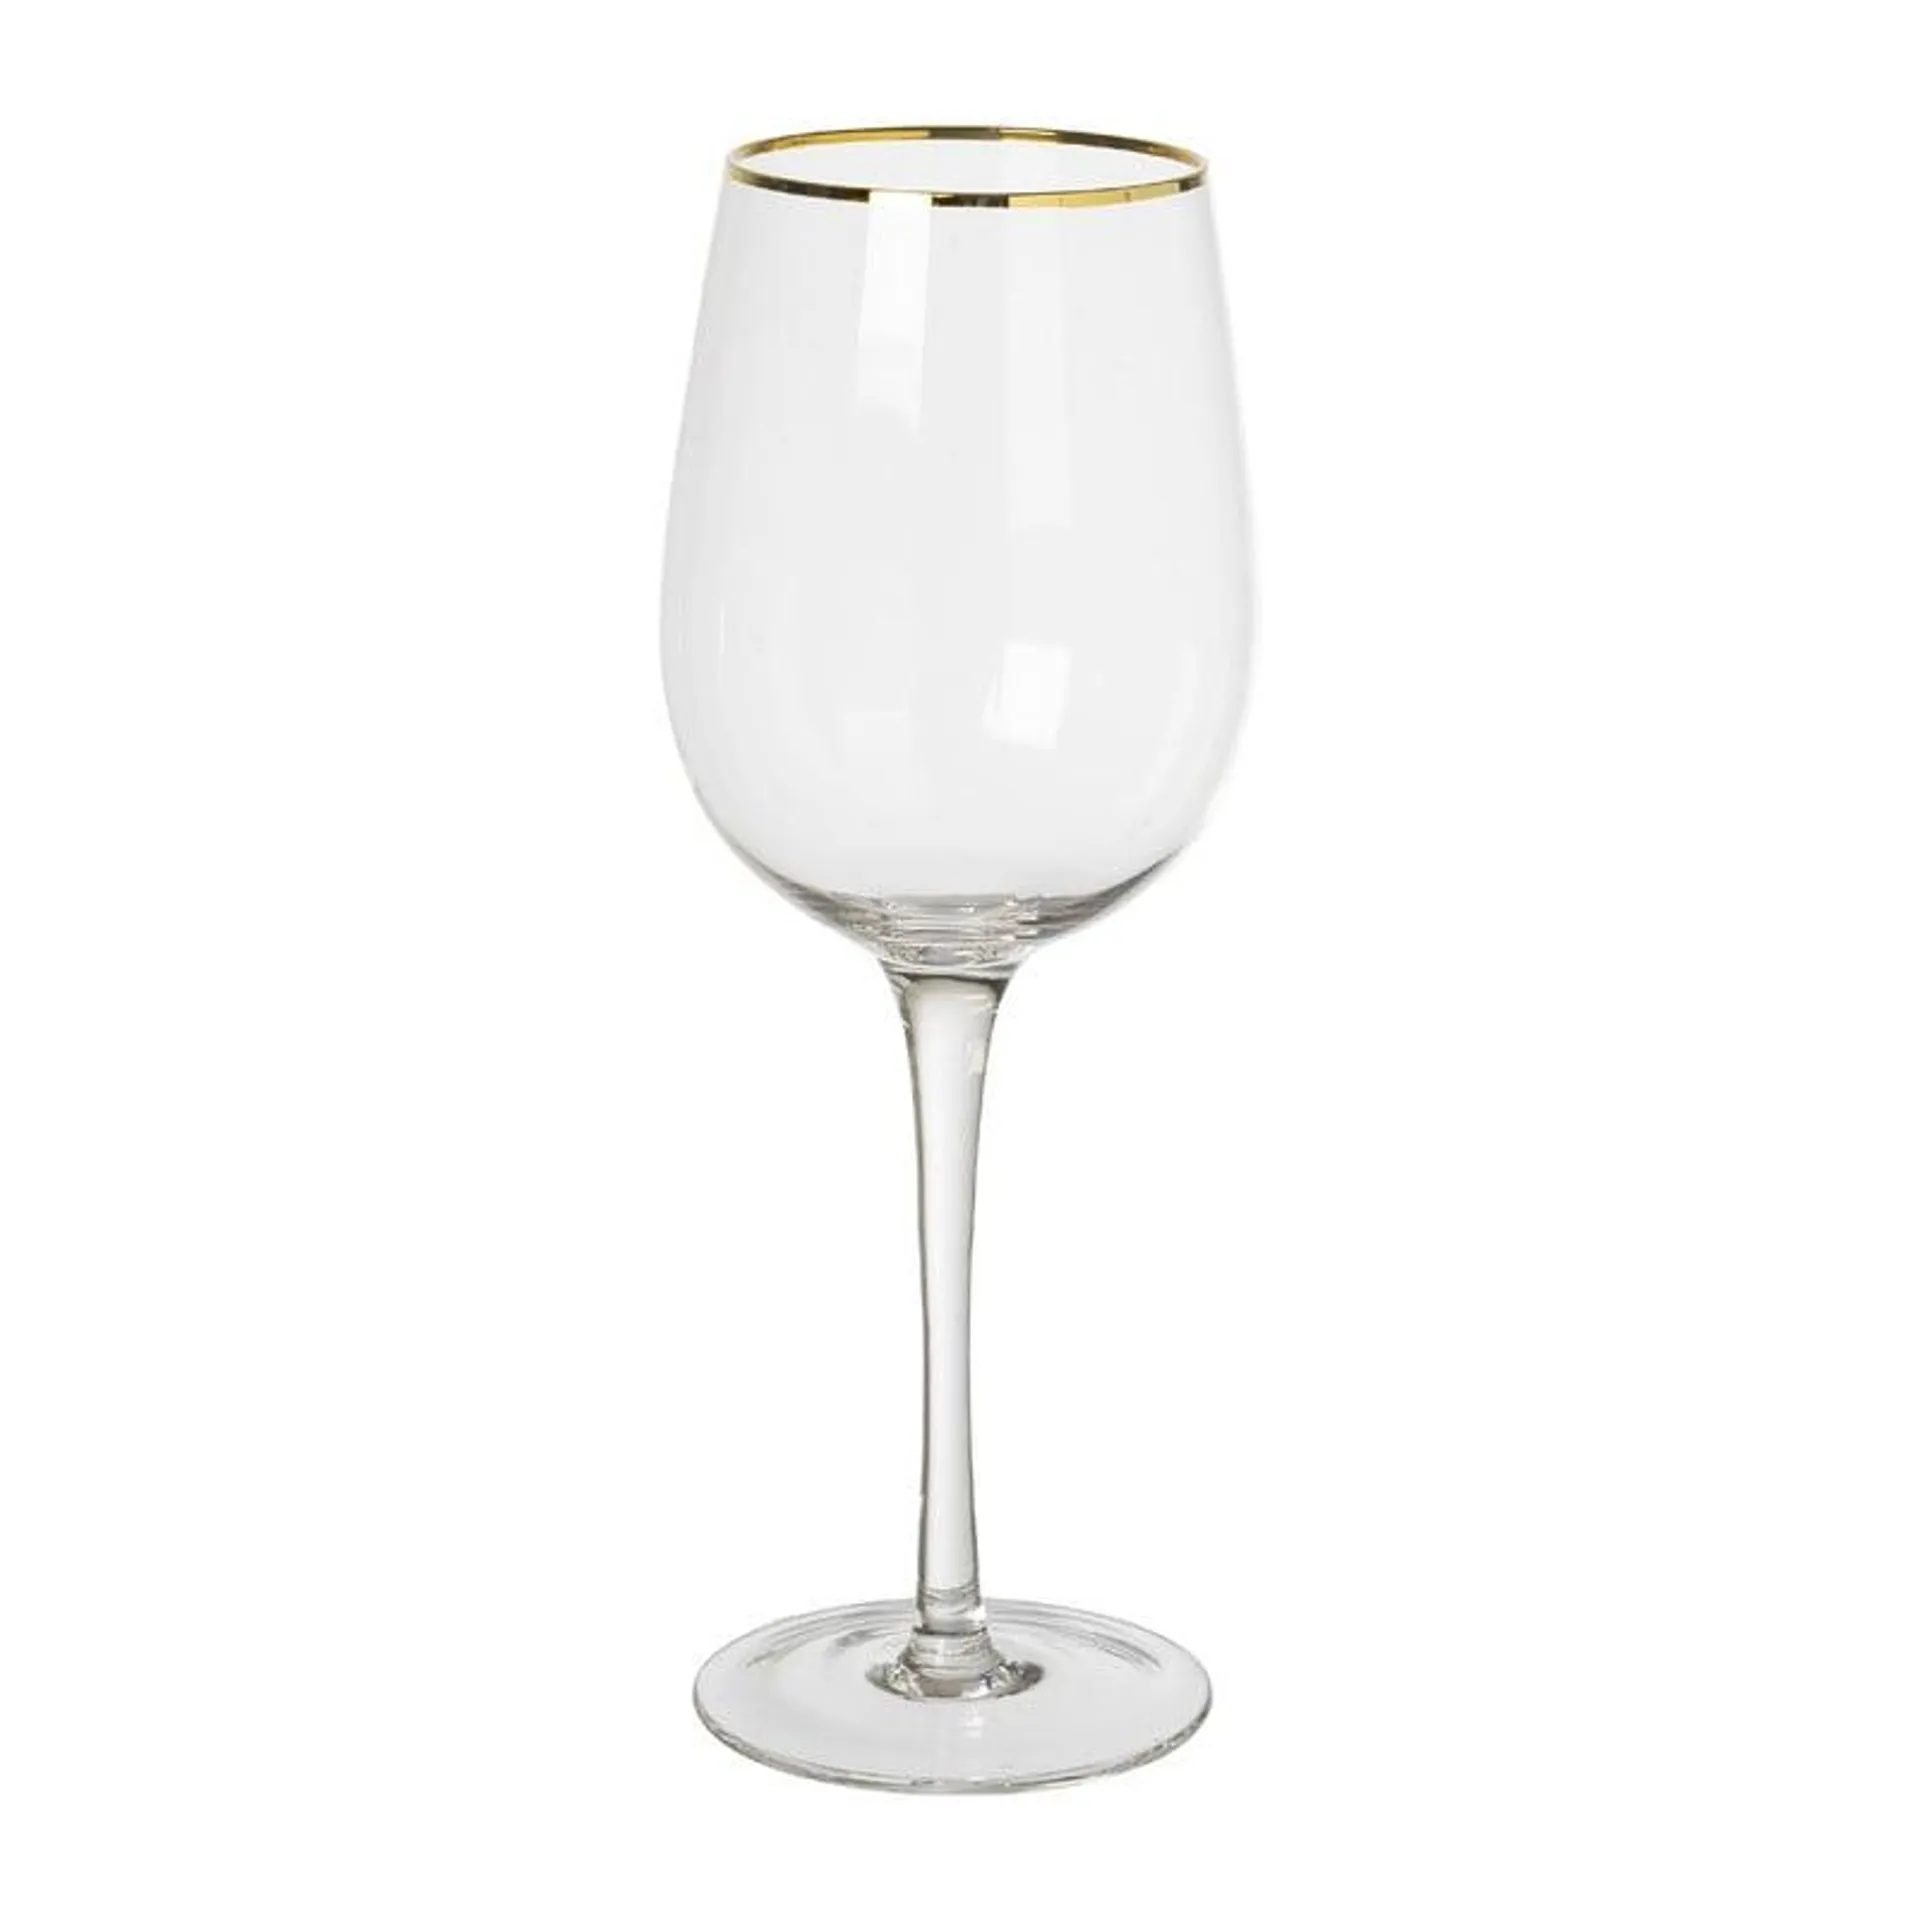 Wijnglas gouden rand - transparant - 380 ml